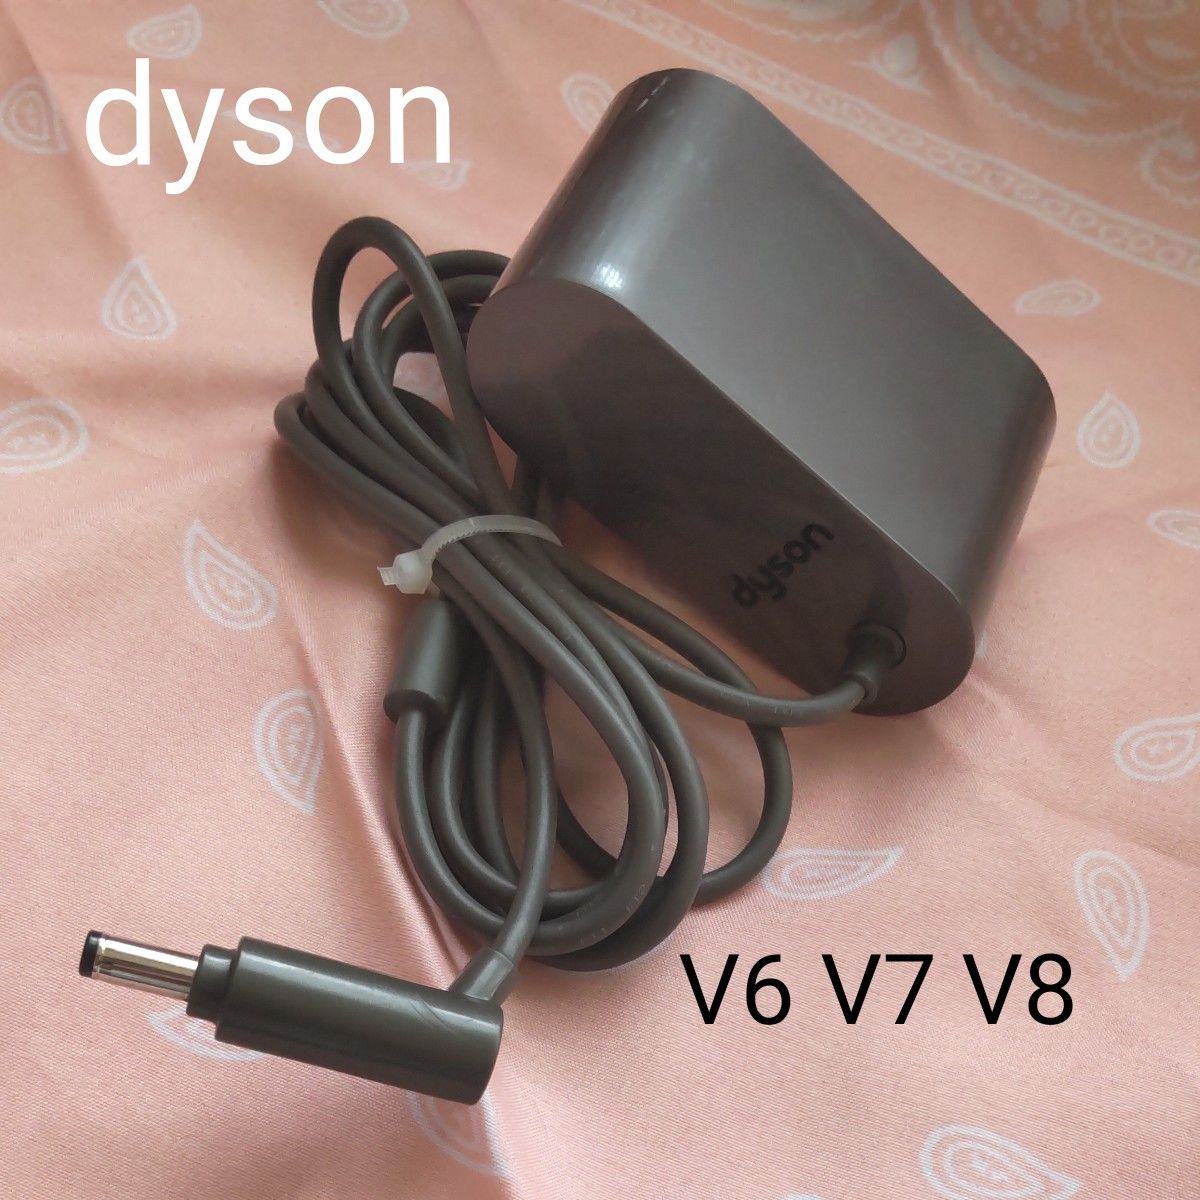 dyson 充電器 V6 V7 V8 USED品 